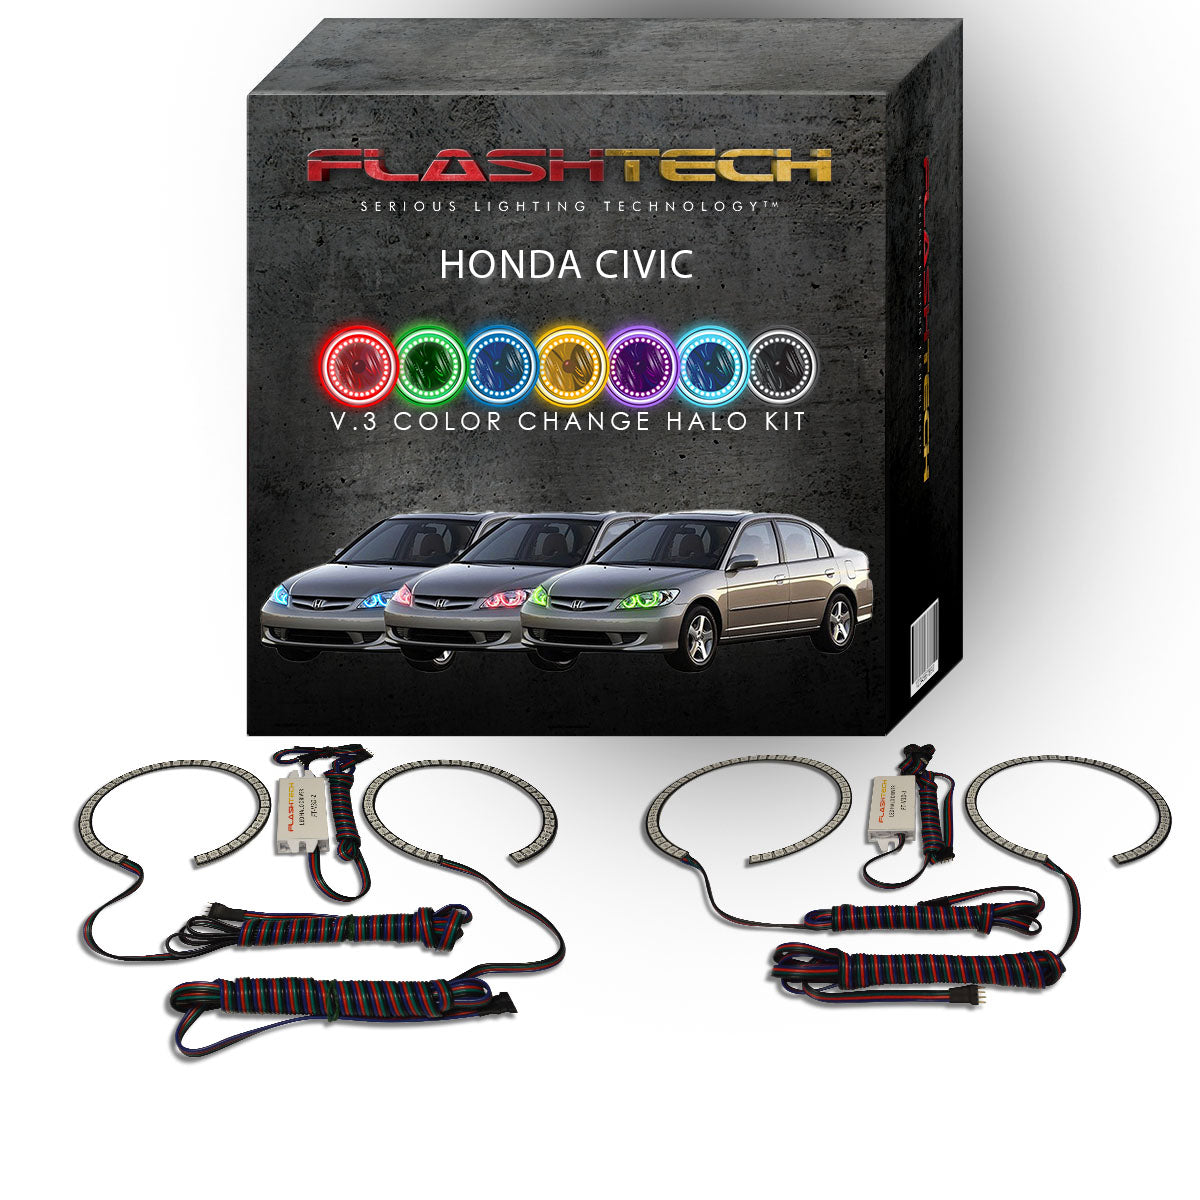 Honda-Civic-2004, 2005-LED-Halo-Headlights-RGB-No Remote-HO-CV0405-V3H